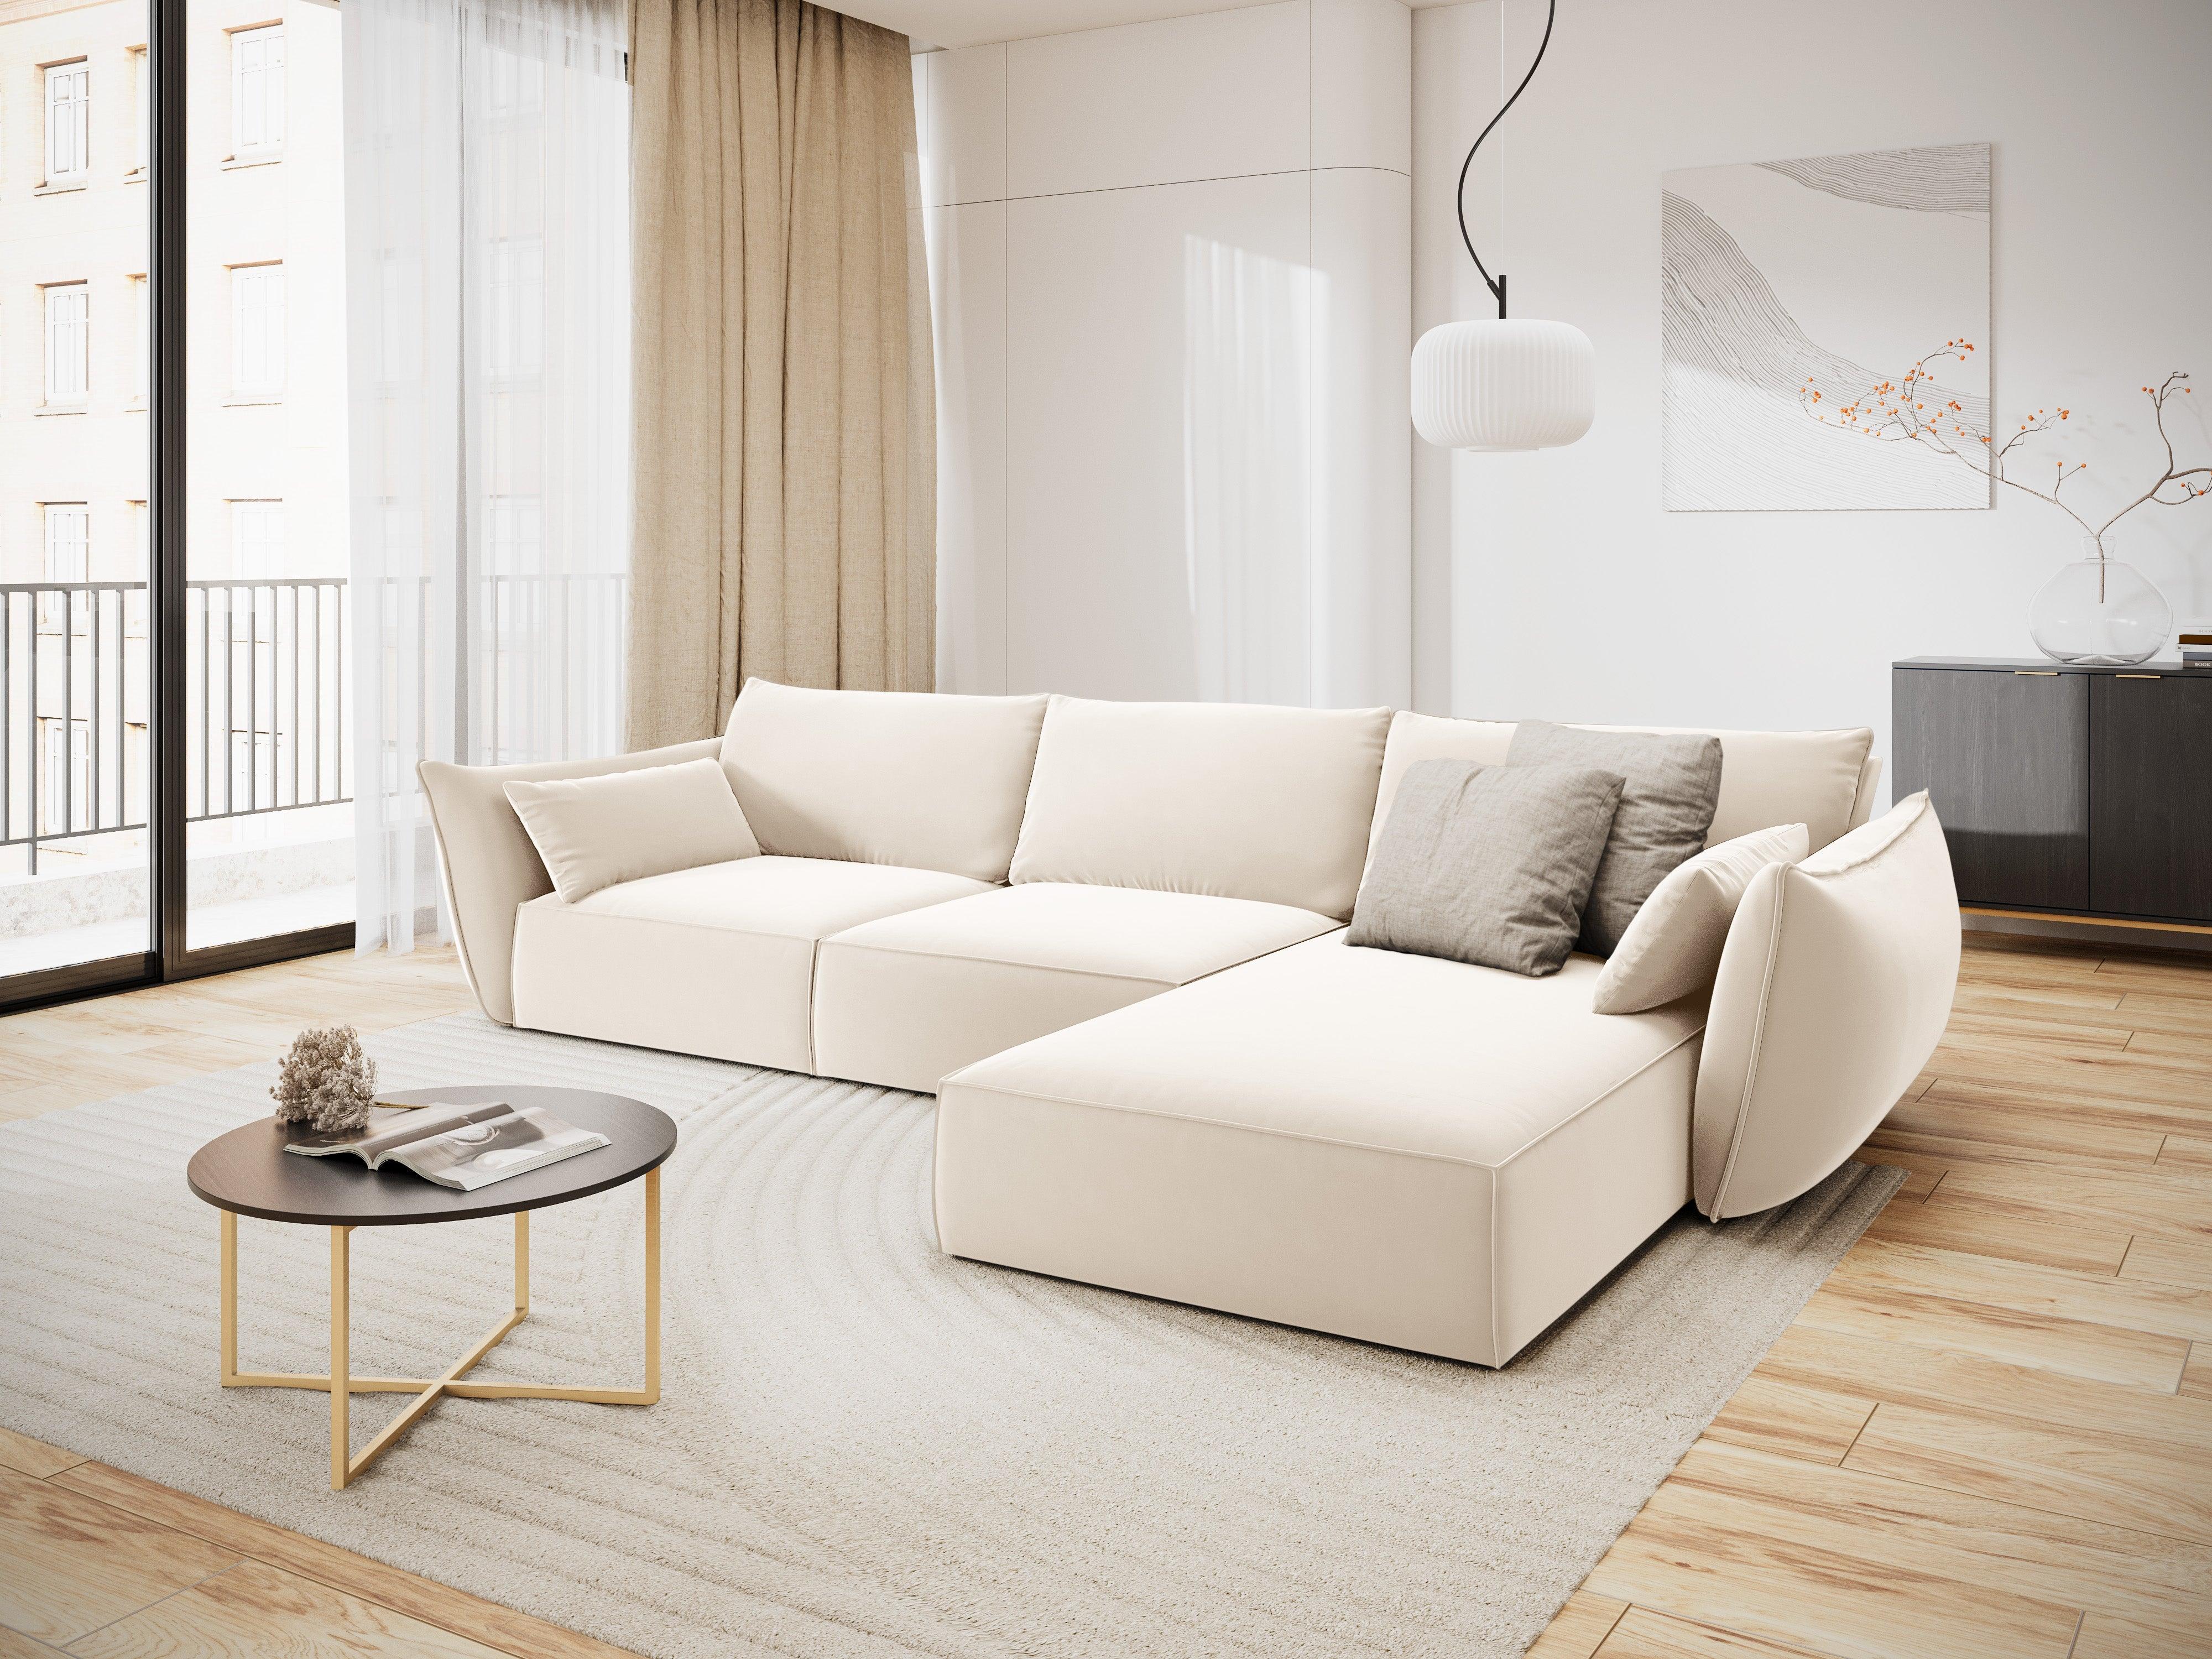 Velvet Right Corner Sofa, "Vanda", 4 Seats, 300x166x85
Made in Europe, Mazzini Sofas, Eye on Design